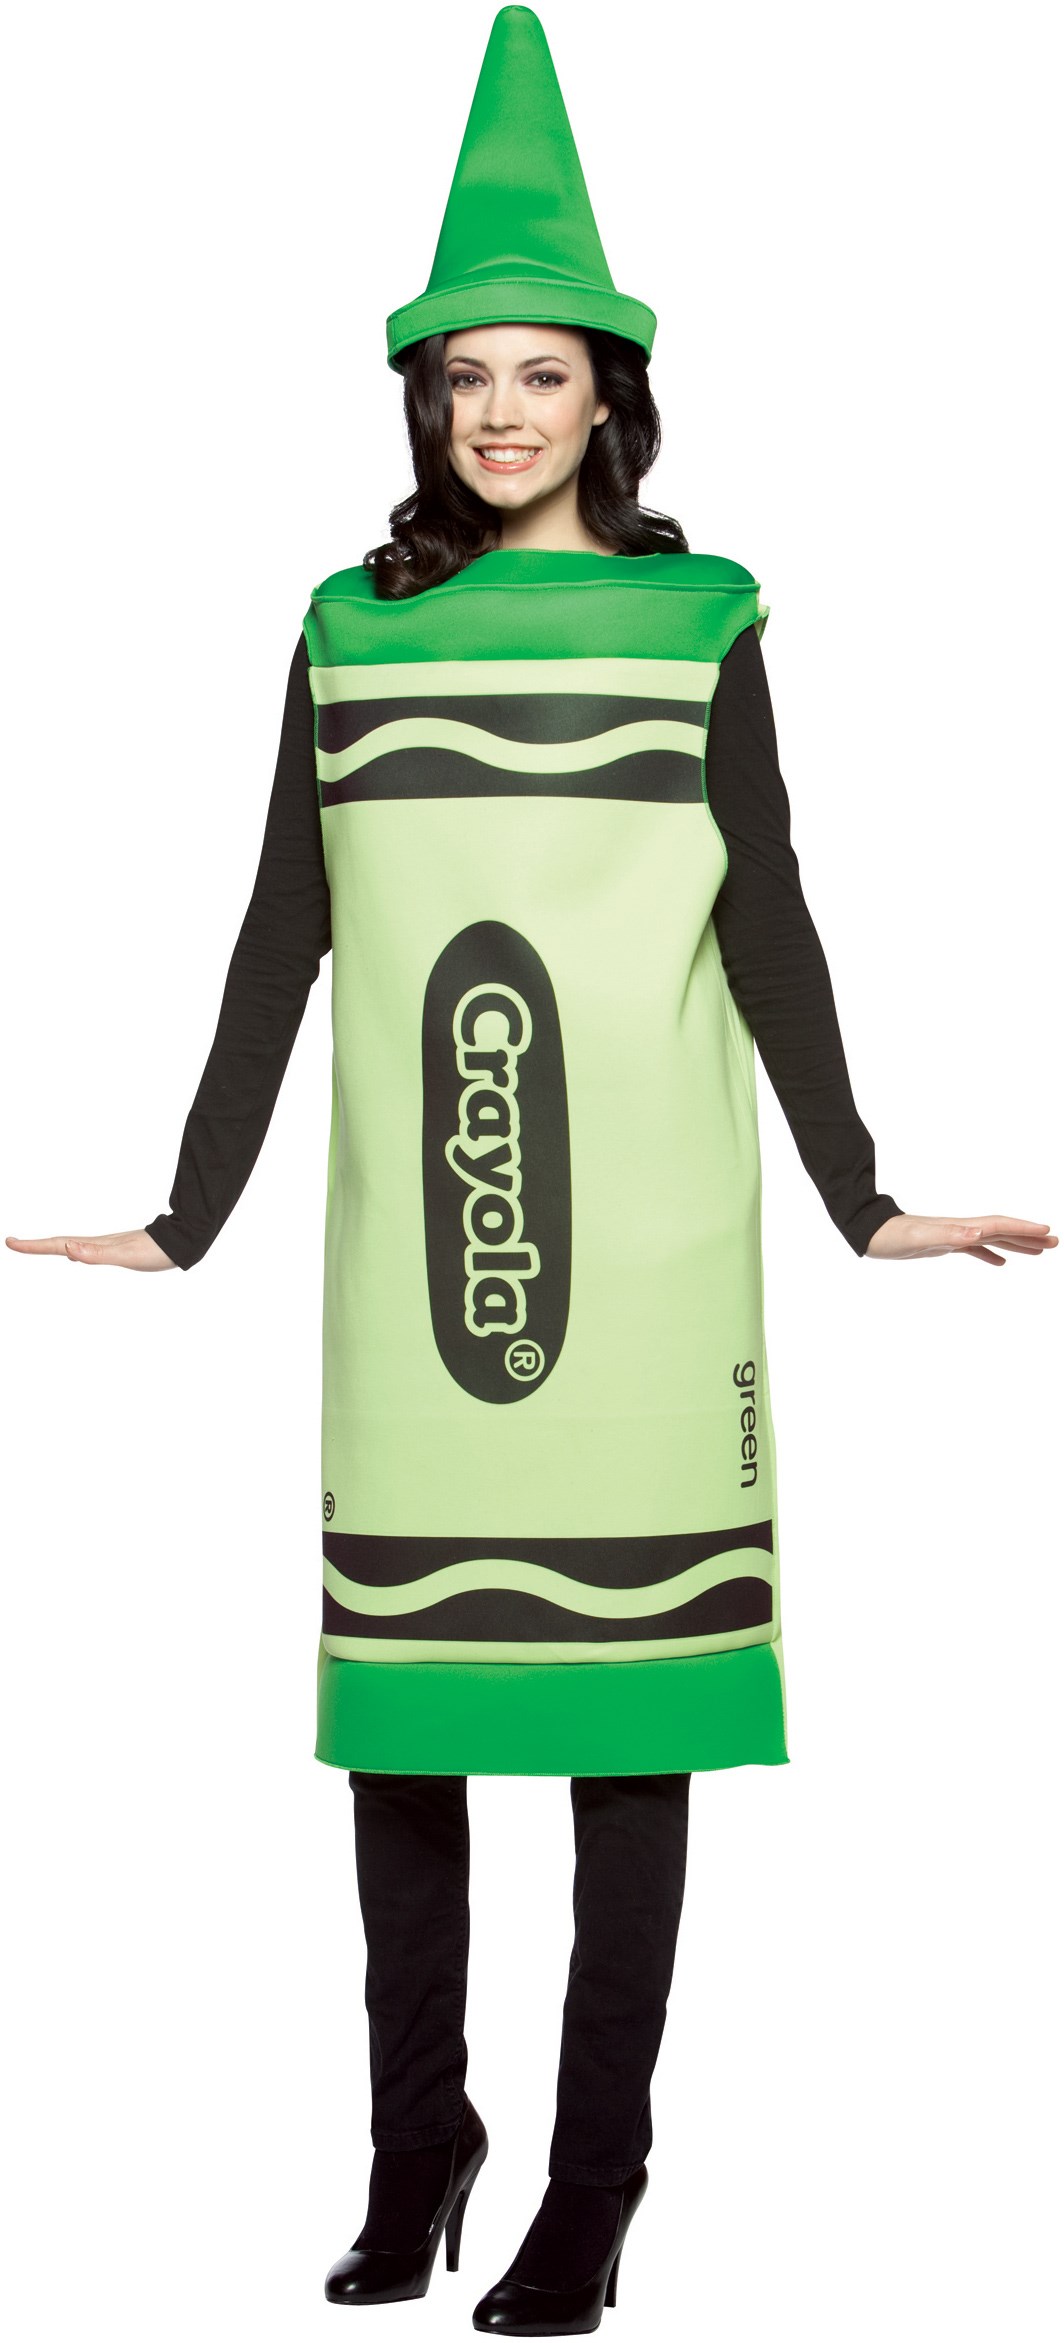 Crayola Green Crayon Adult Costume